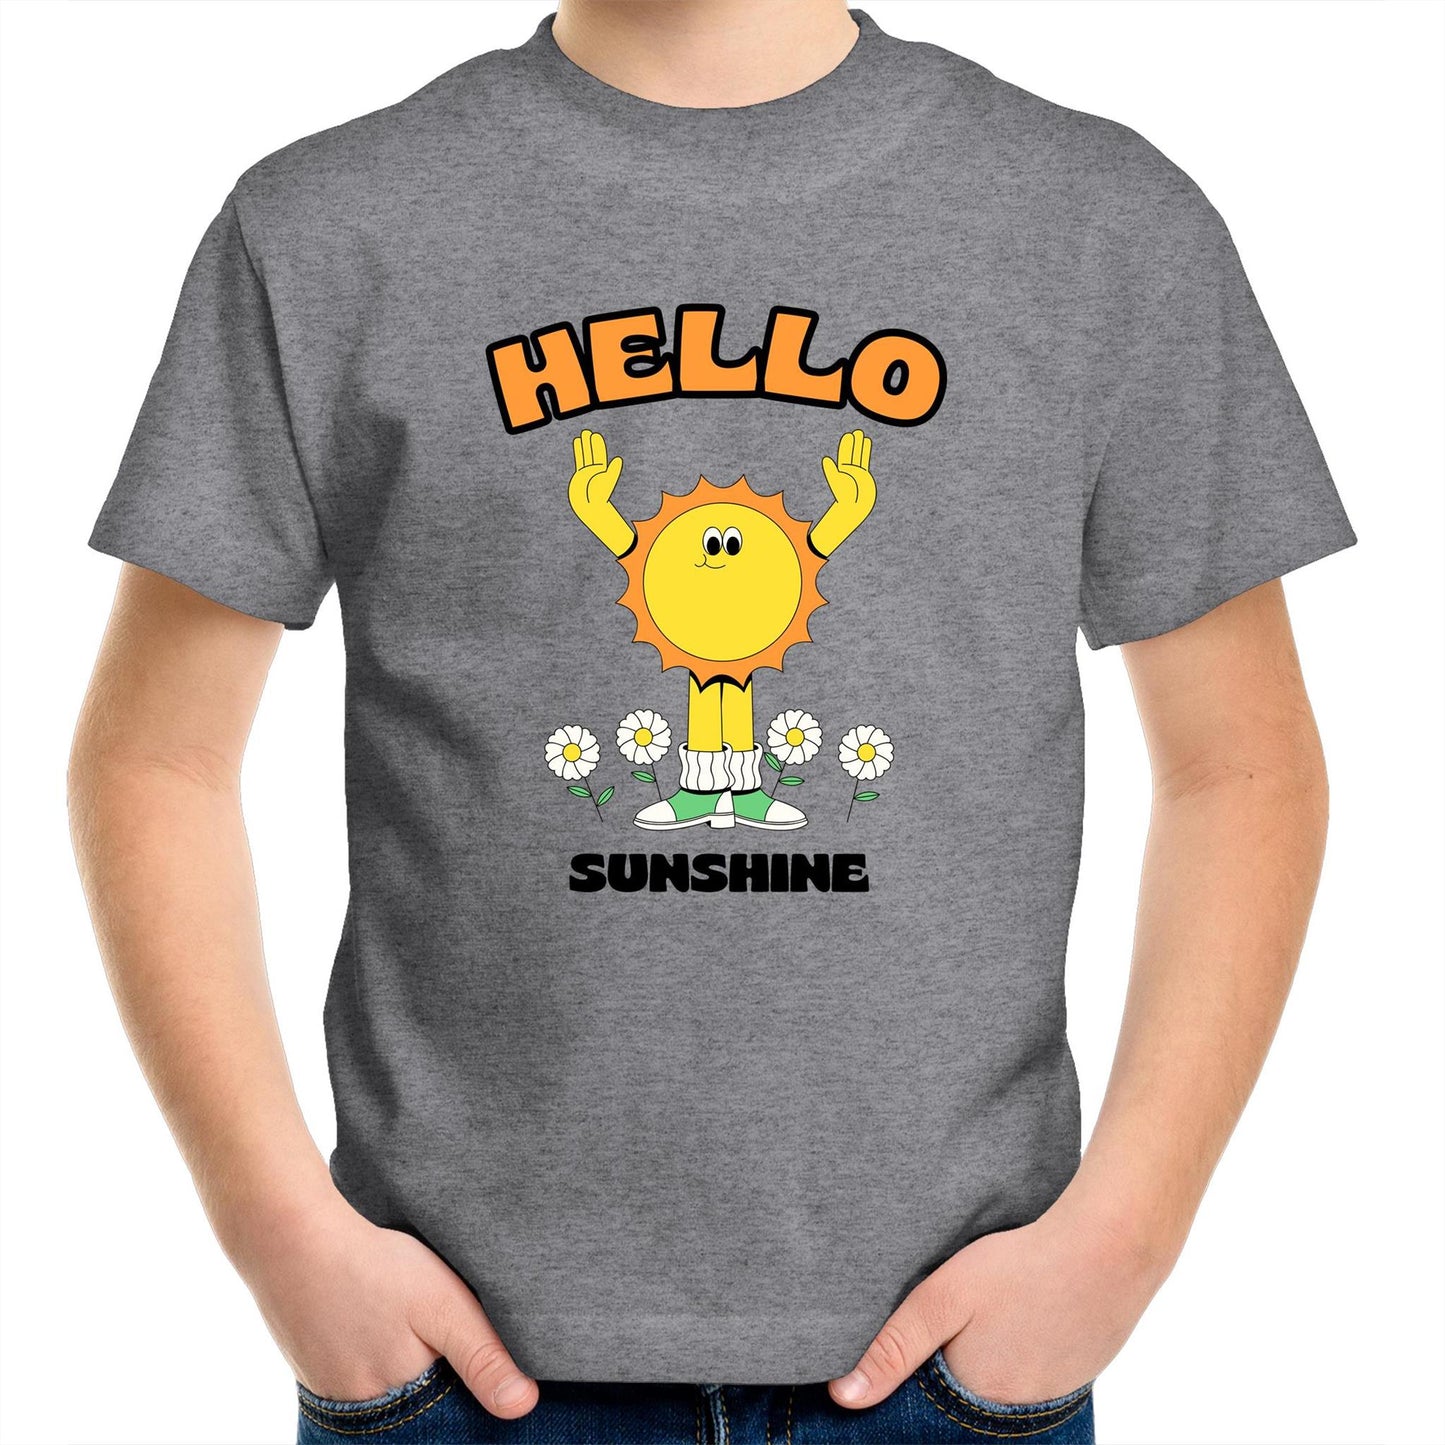 Hello Sunshine - Kids Youth Crew T-Shirt Grey Marle Kids Youth T-shirt Retro Summer